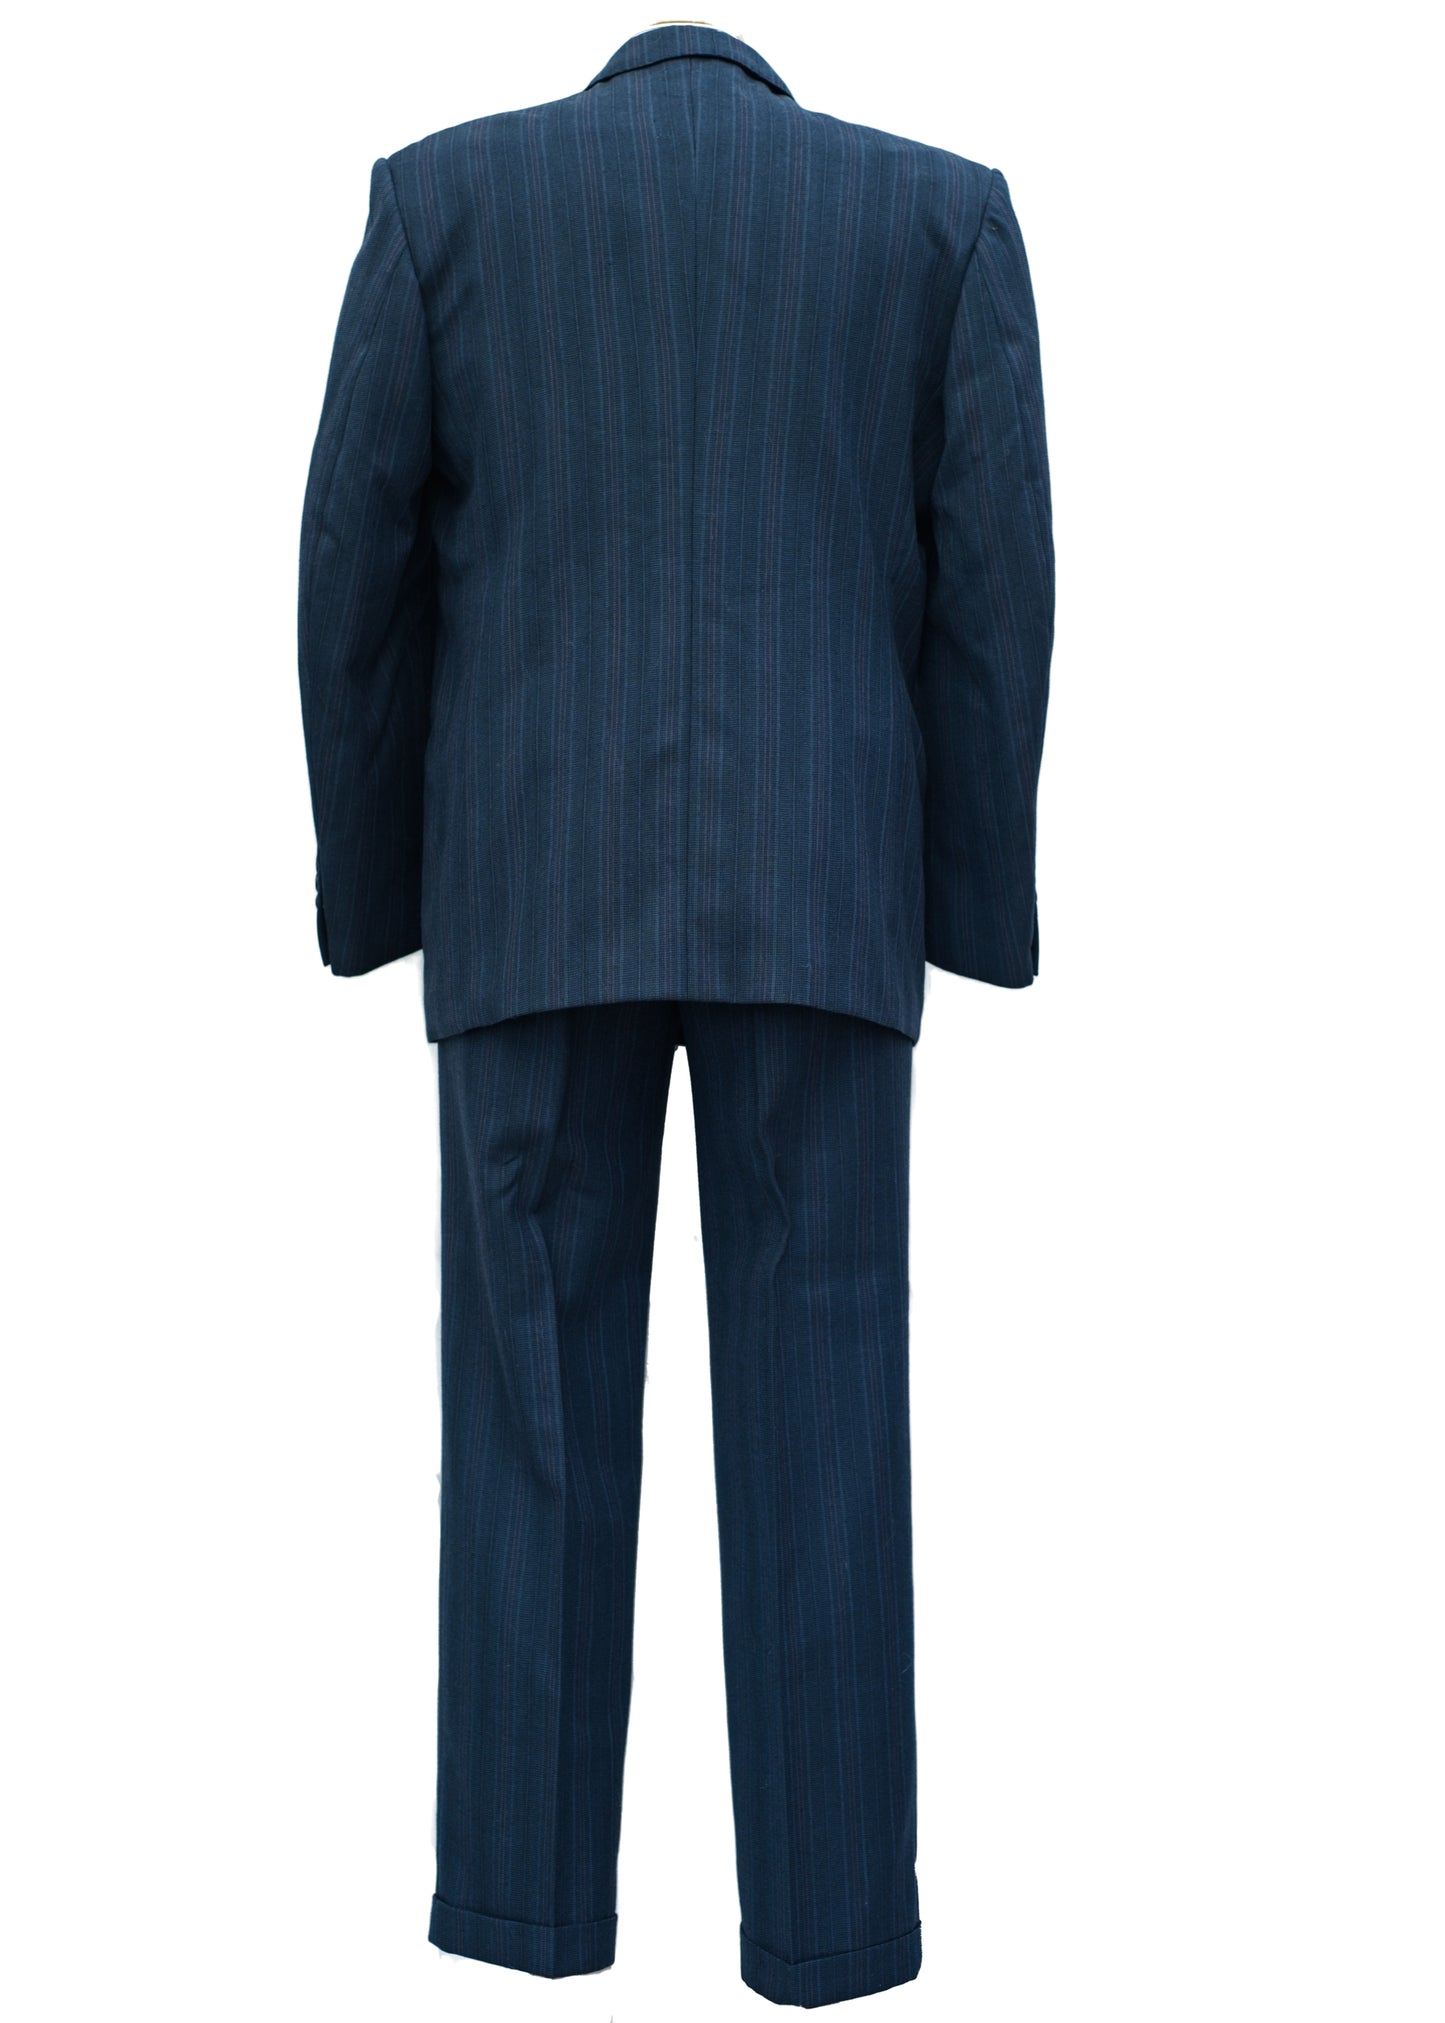 Vintage Men's Blue Double Breasted Suit by Centaur • 40S